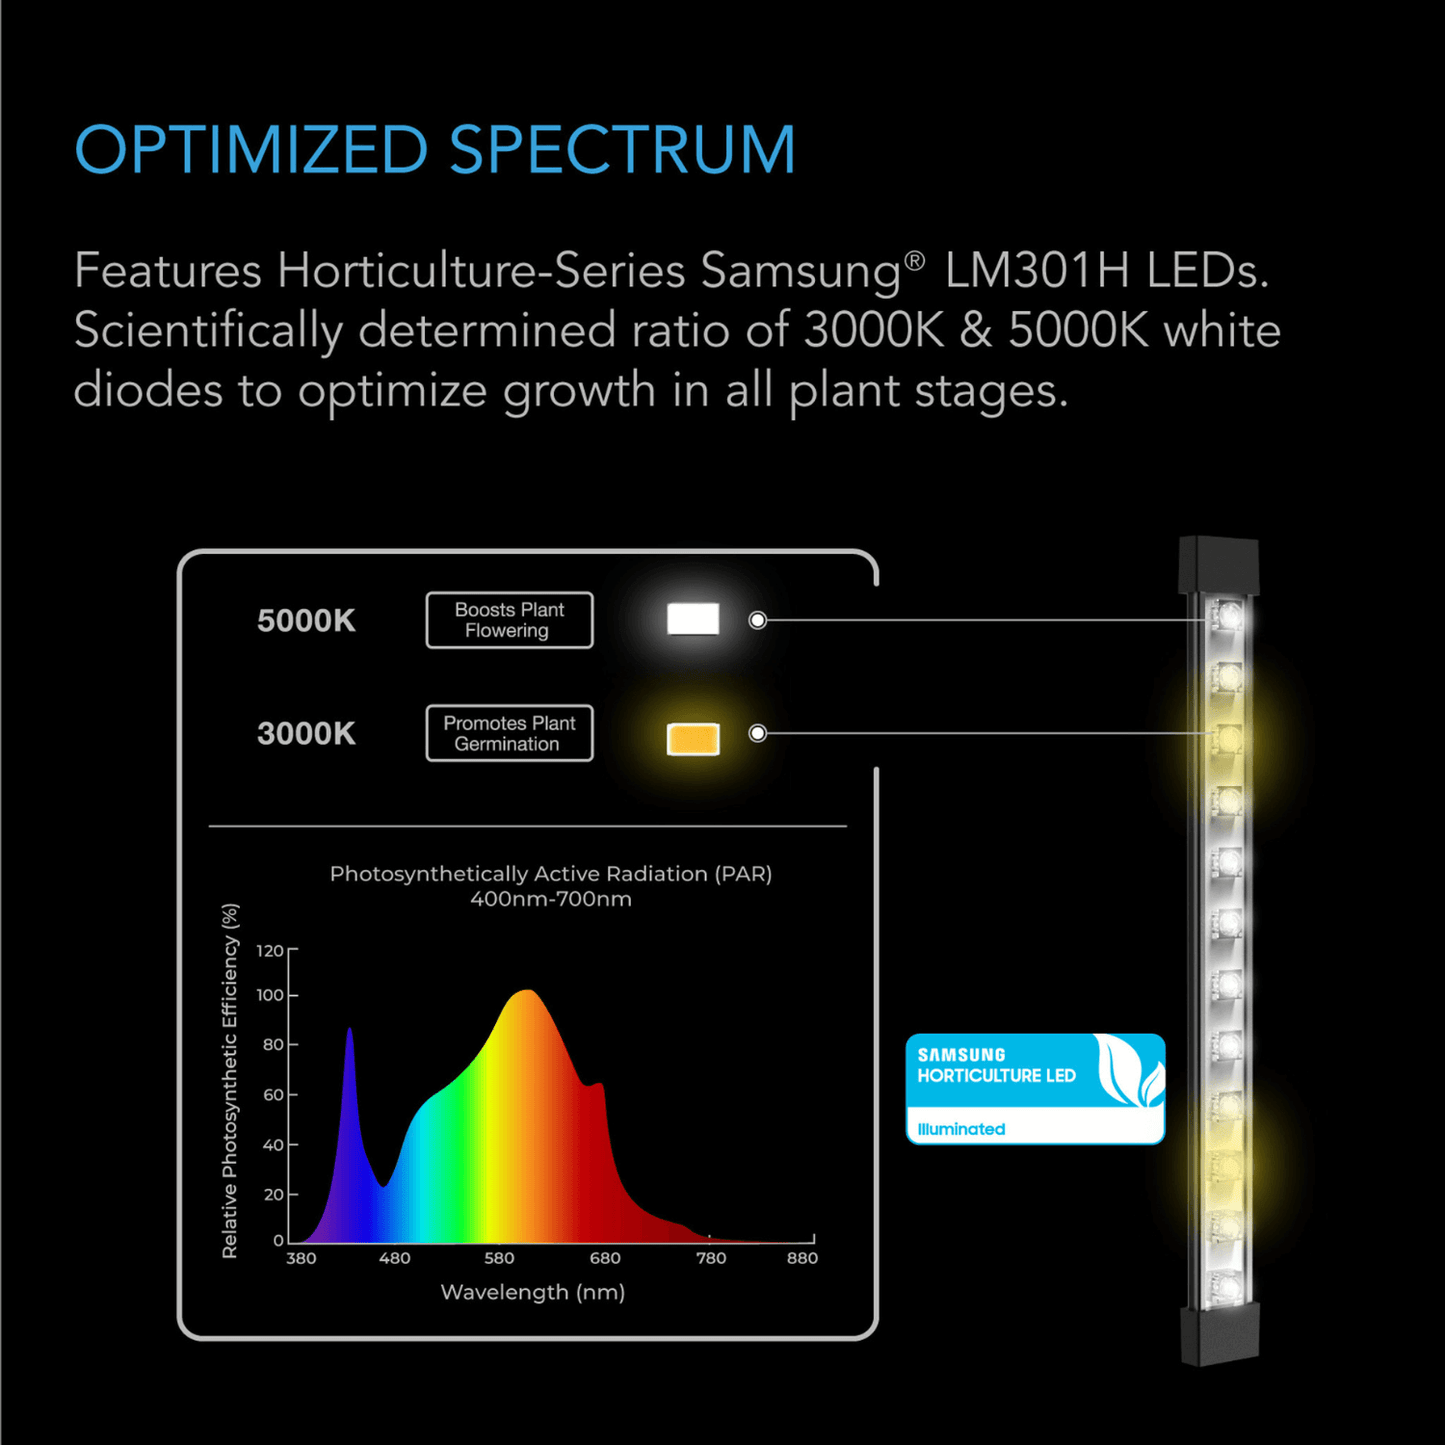 AC Infinity IONBEAM S11, Full Spectrum LED Grow Light Bars, Samsung LM301H, 11-Inch | AC-NES11 | Grow Tents Depot | Grow Lights | 819137023352